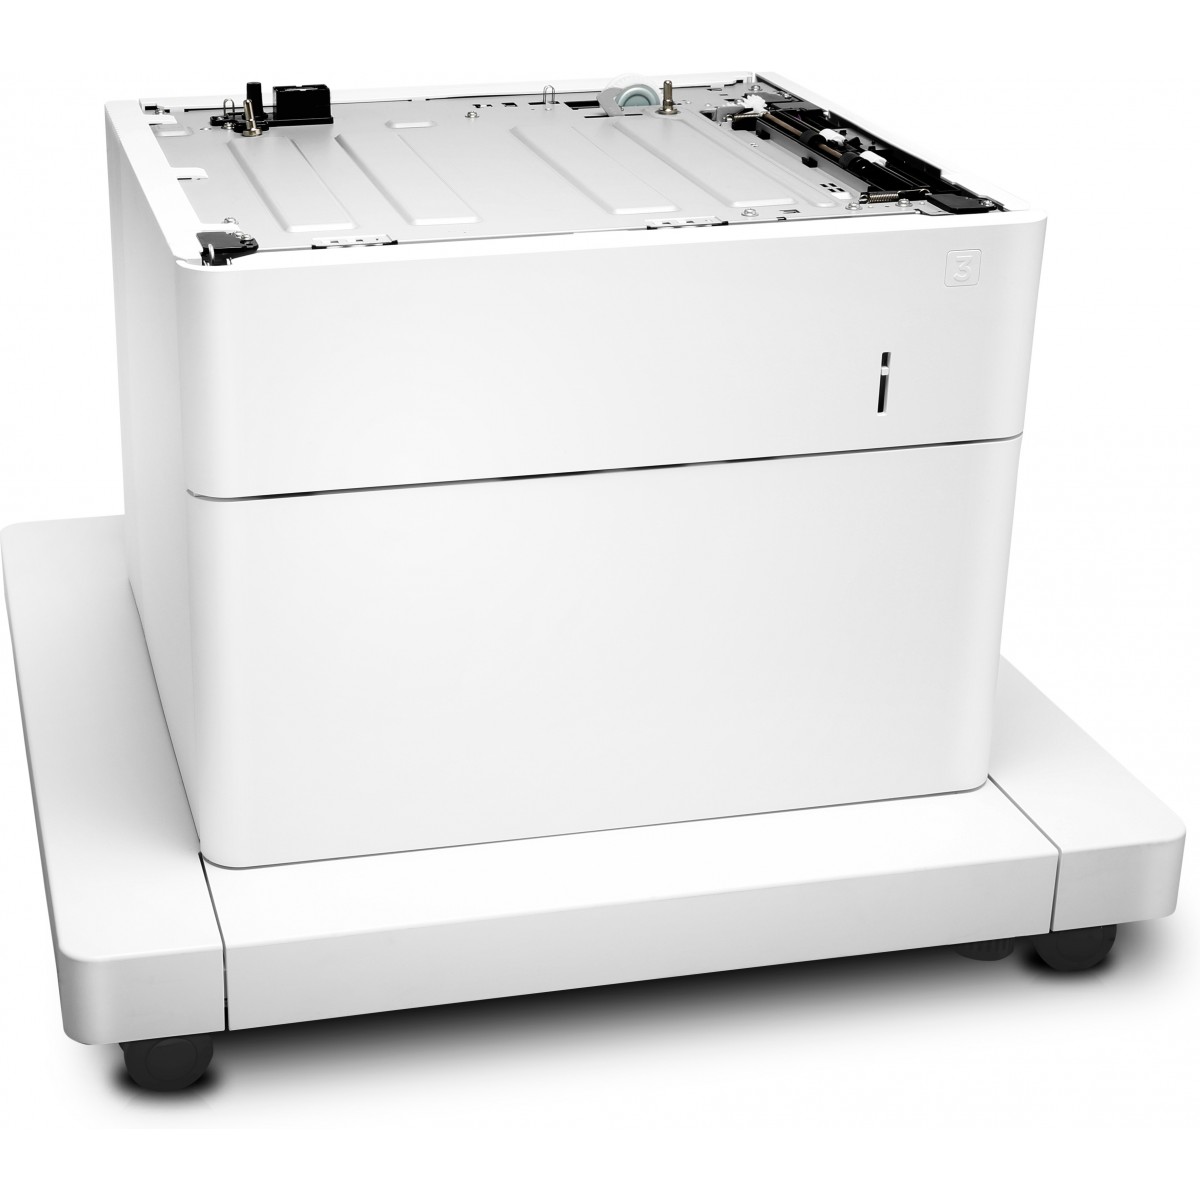 HP LaserJet 1x550 Paper Feeder and Cabinet - Paper tray - HP - LaserJet Enterprise M631 - MFP M633 - LaserJet Enterprise Flow MF